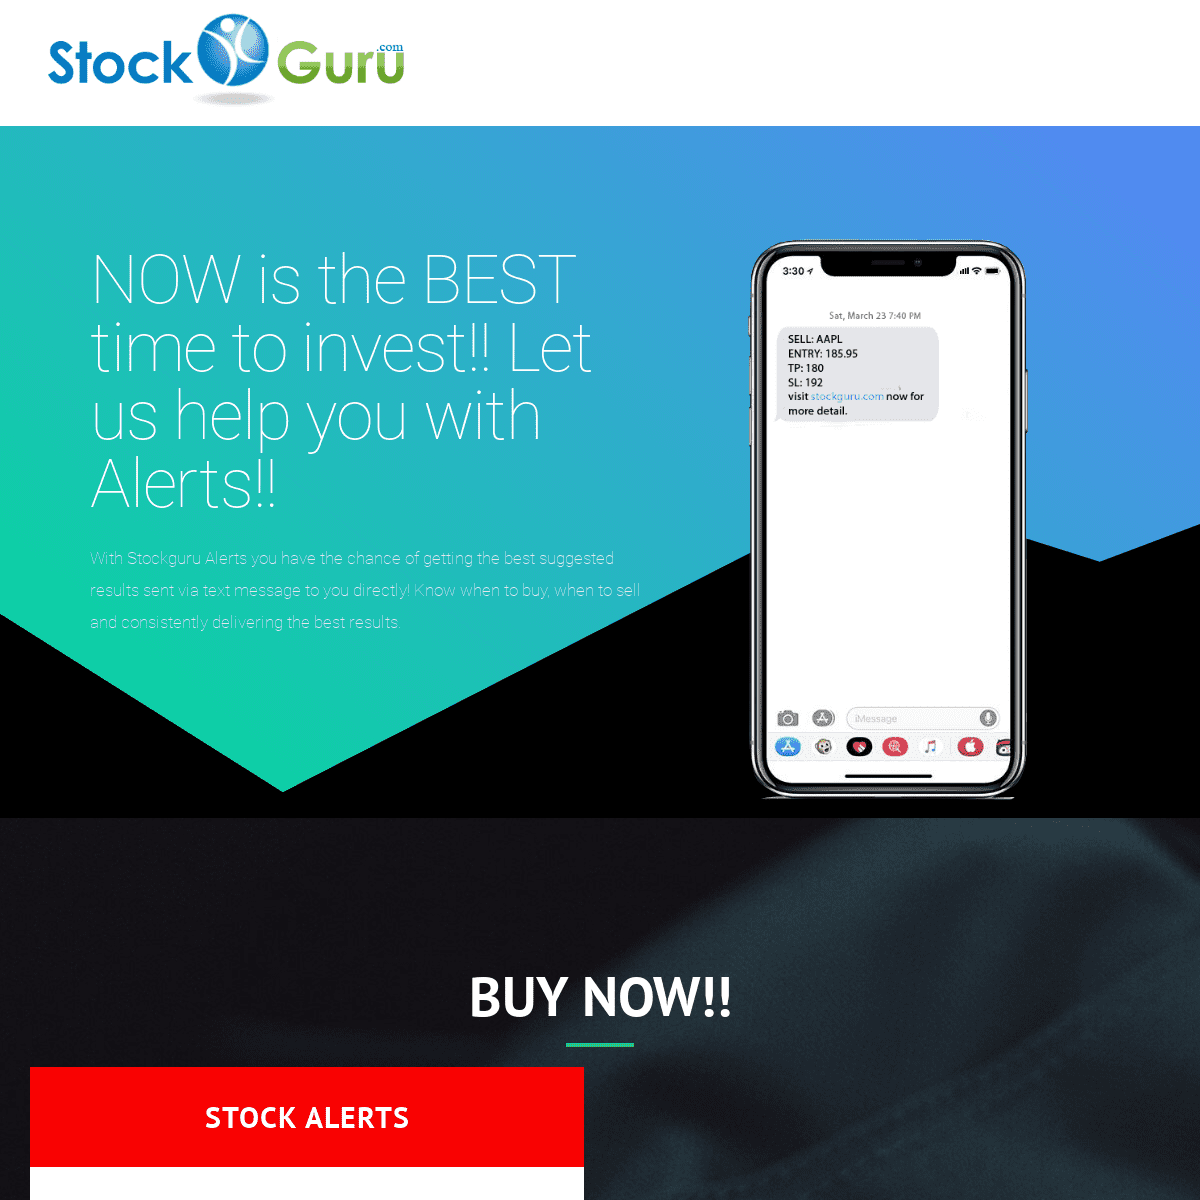 A complete backup of stockguru.com